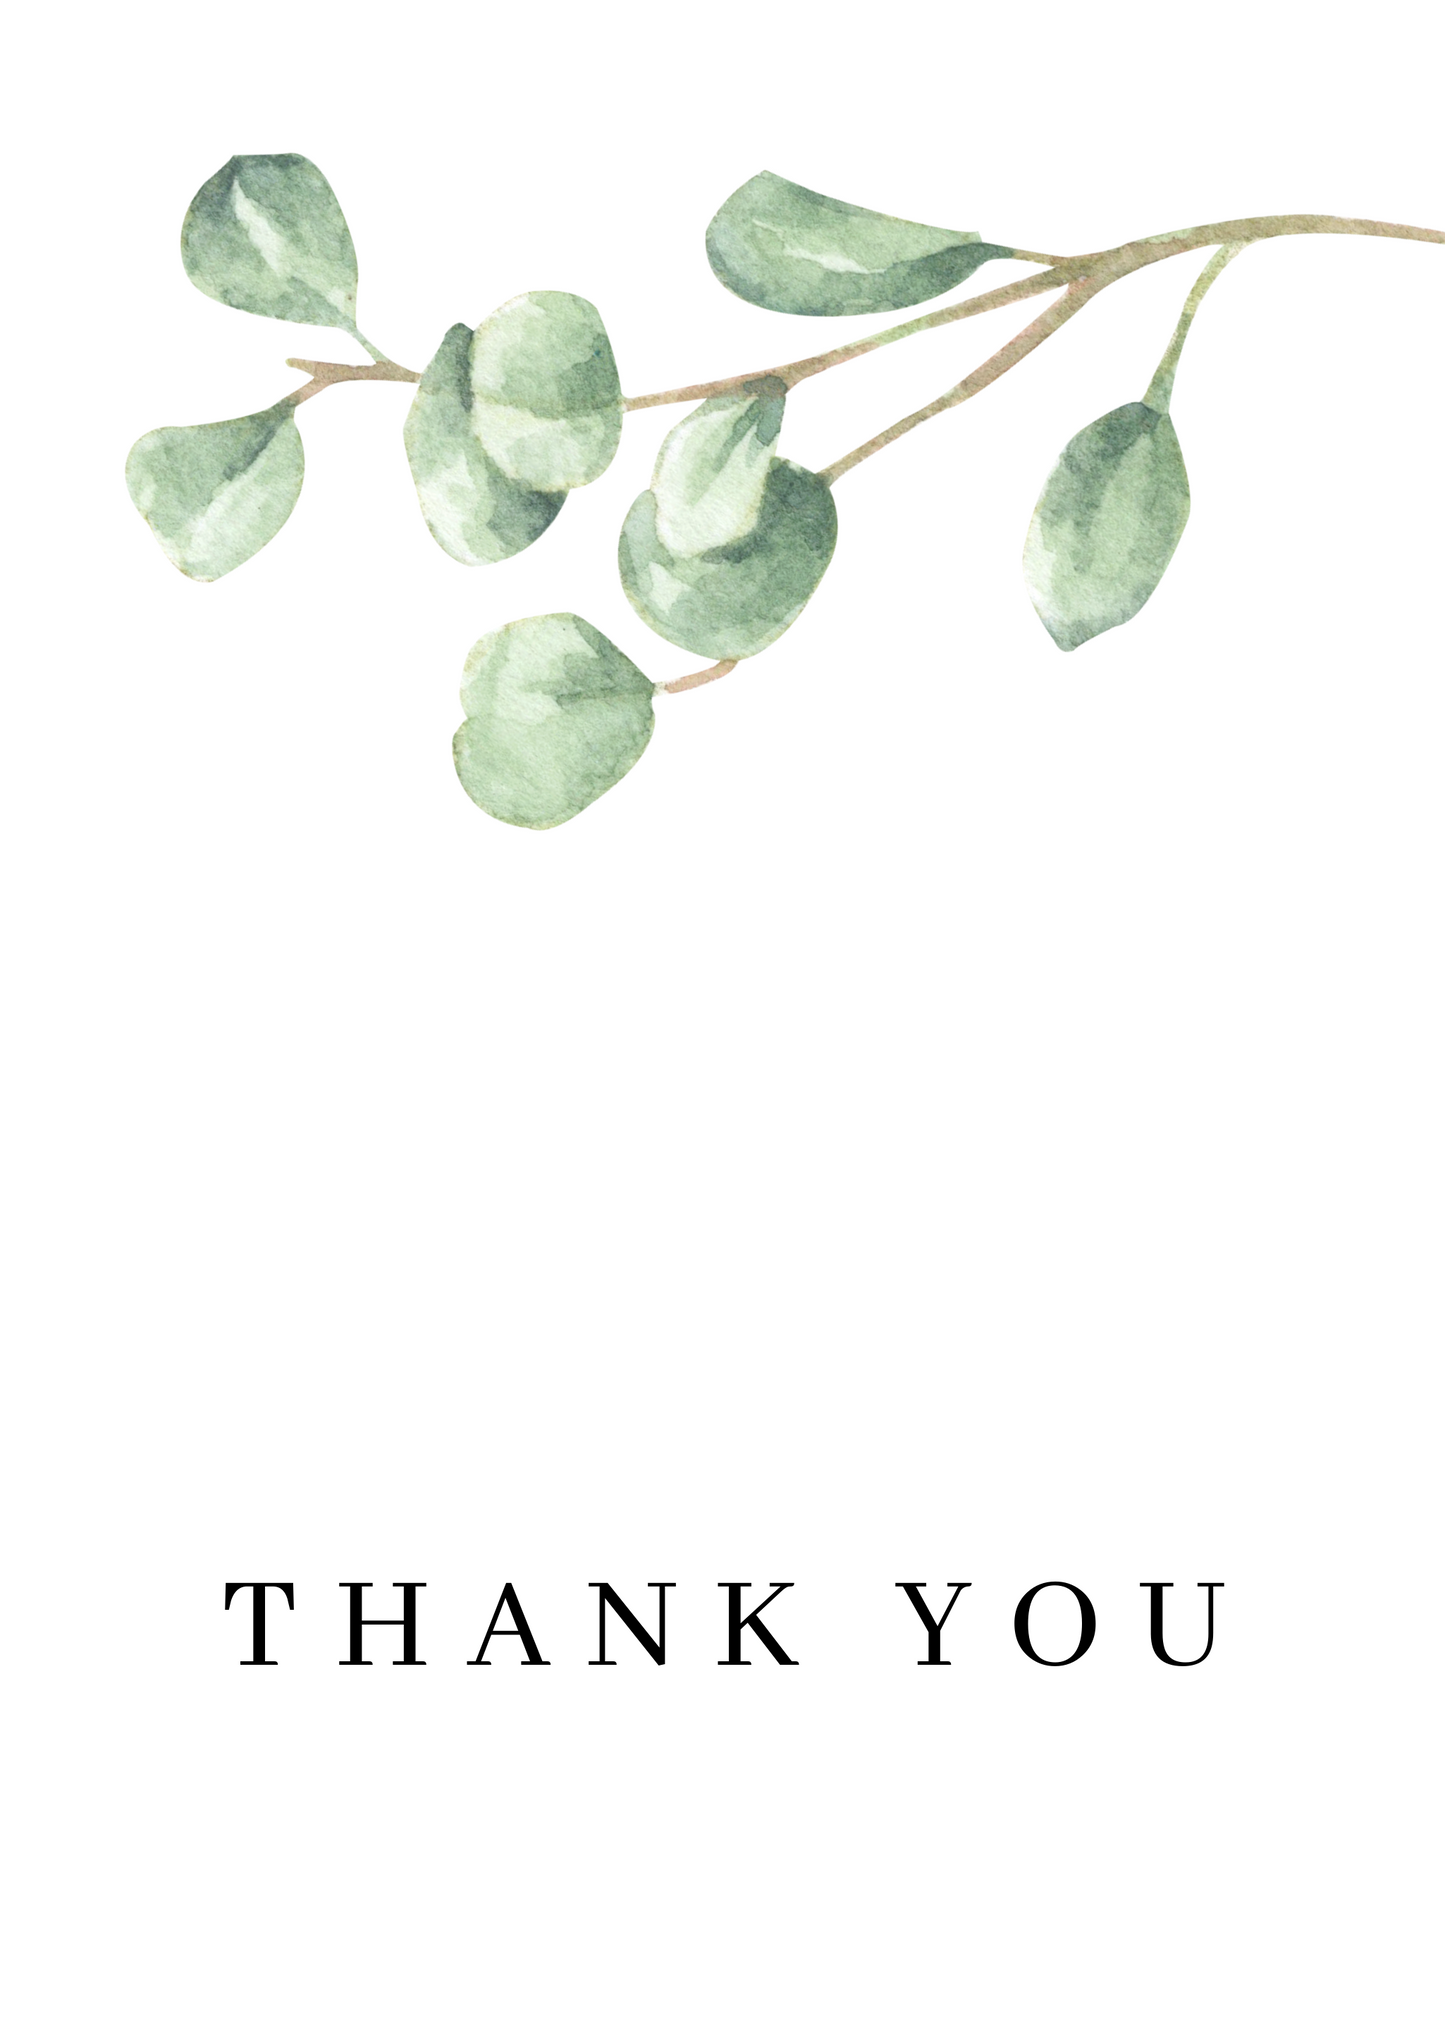 Thank You Eucalyptus Branch Business